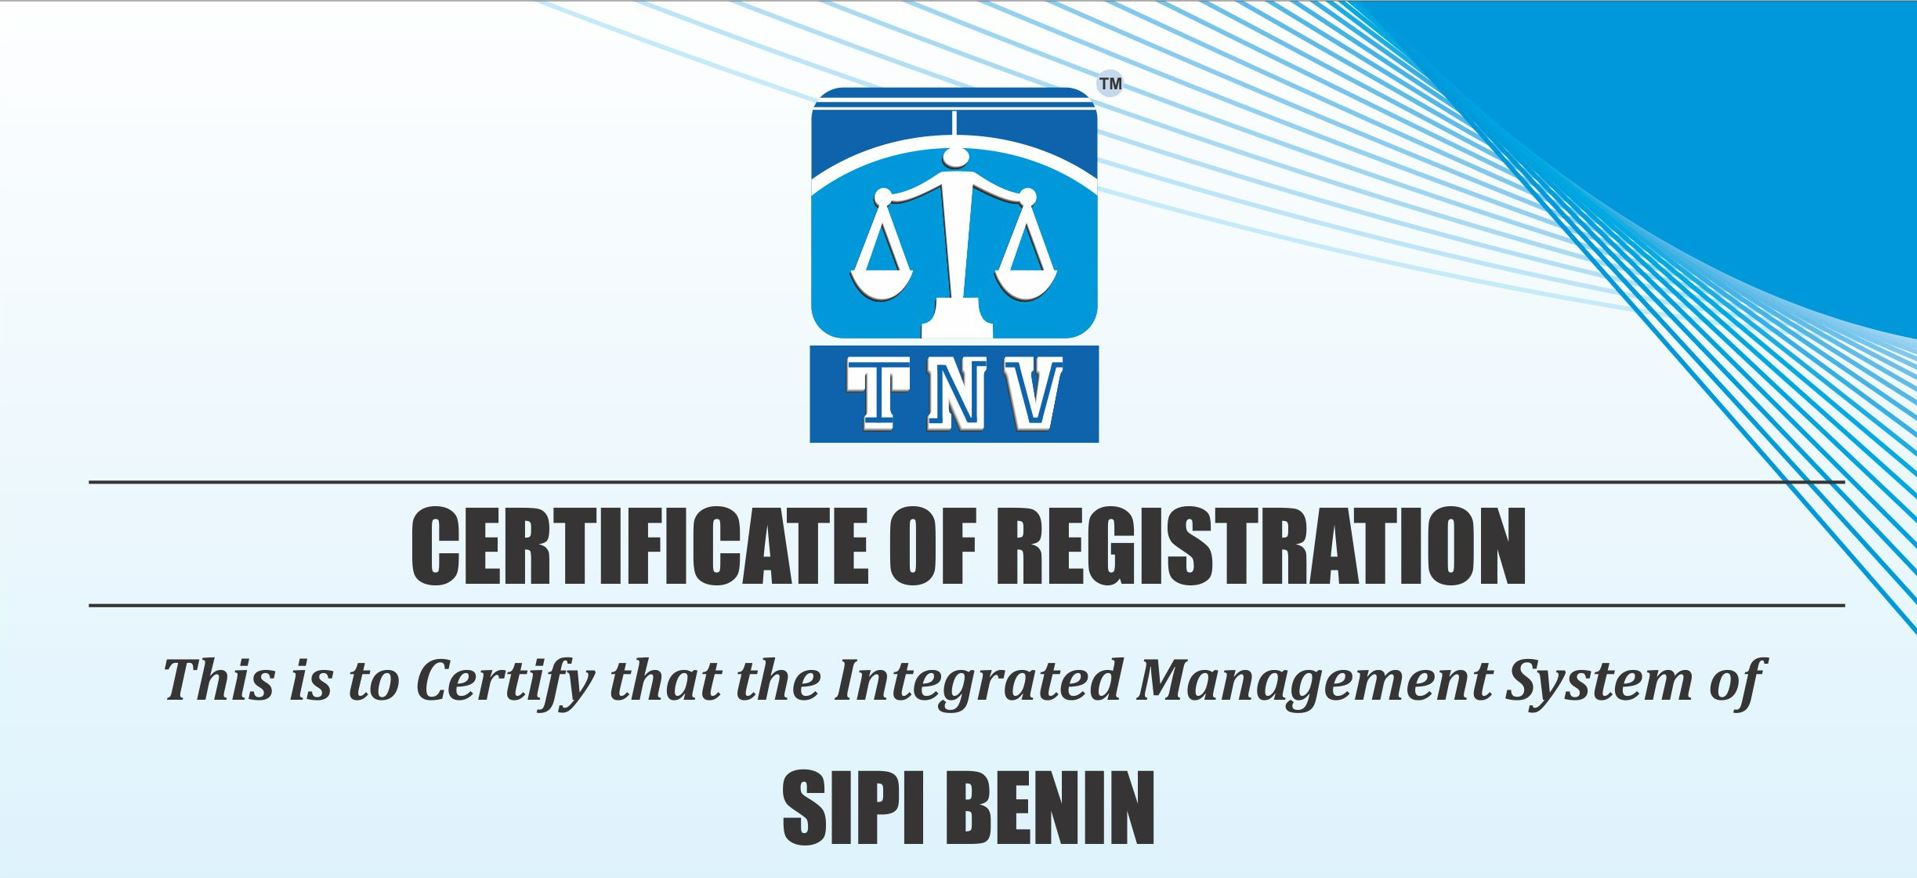 GDIZ ISO certification